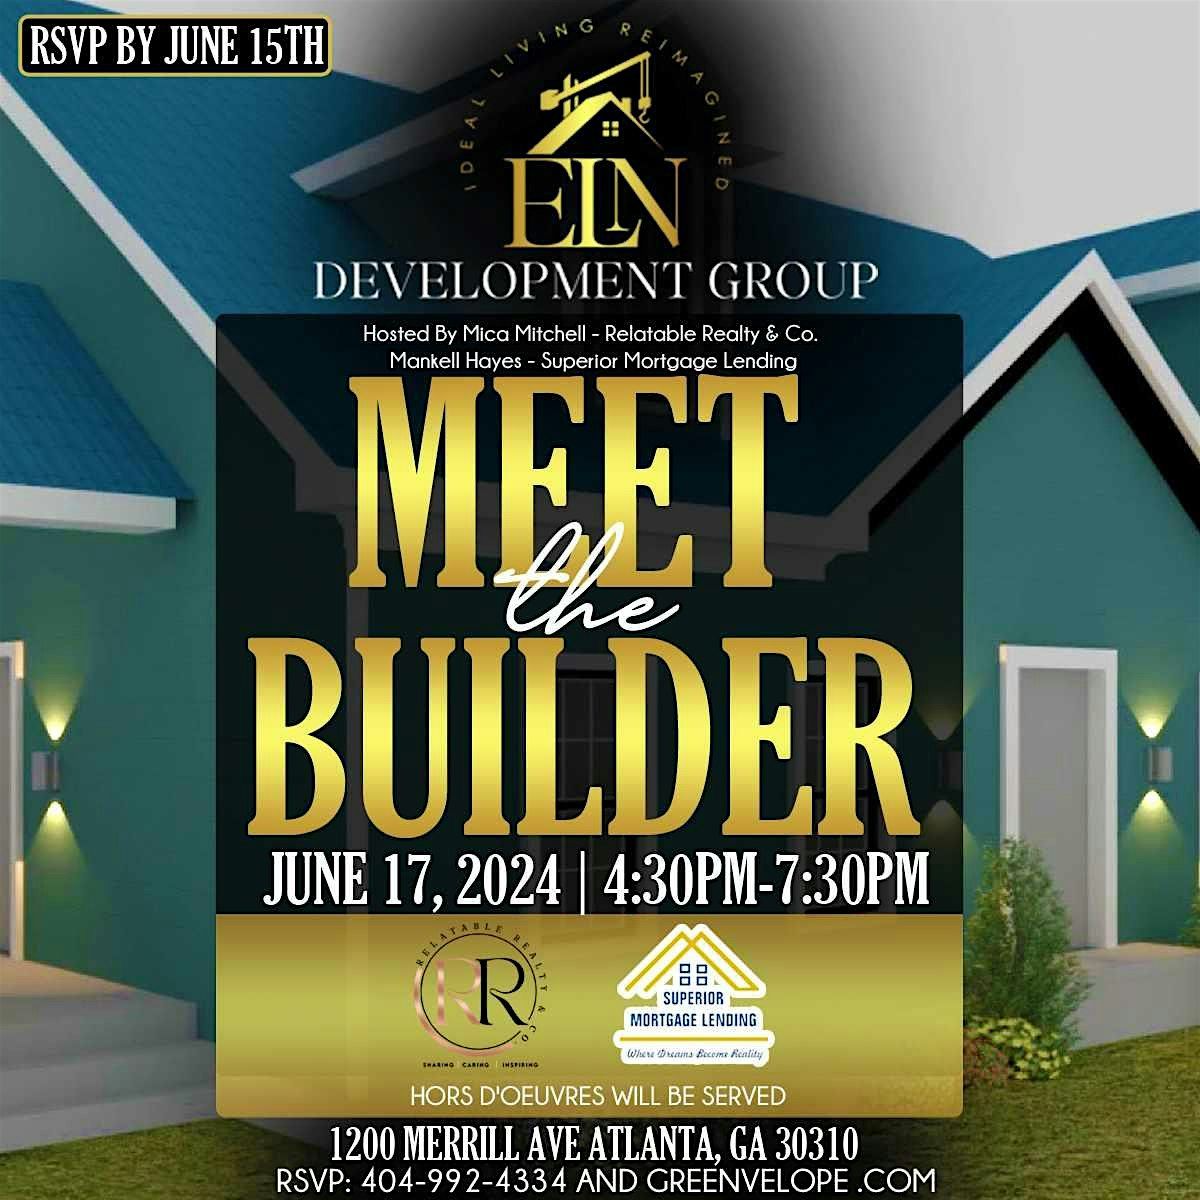 Meet The Builder Of 1200 Merrill Ave Atlanta, GA 30310